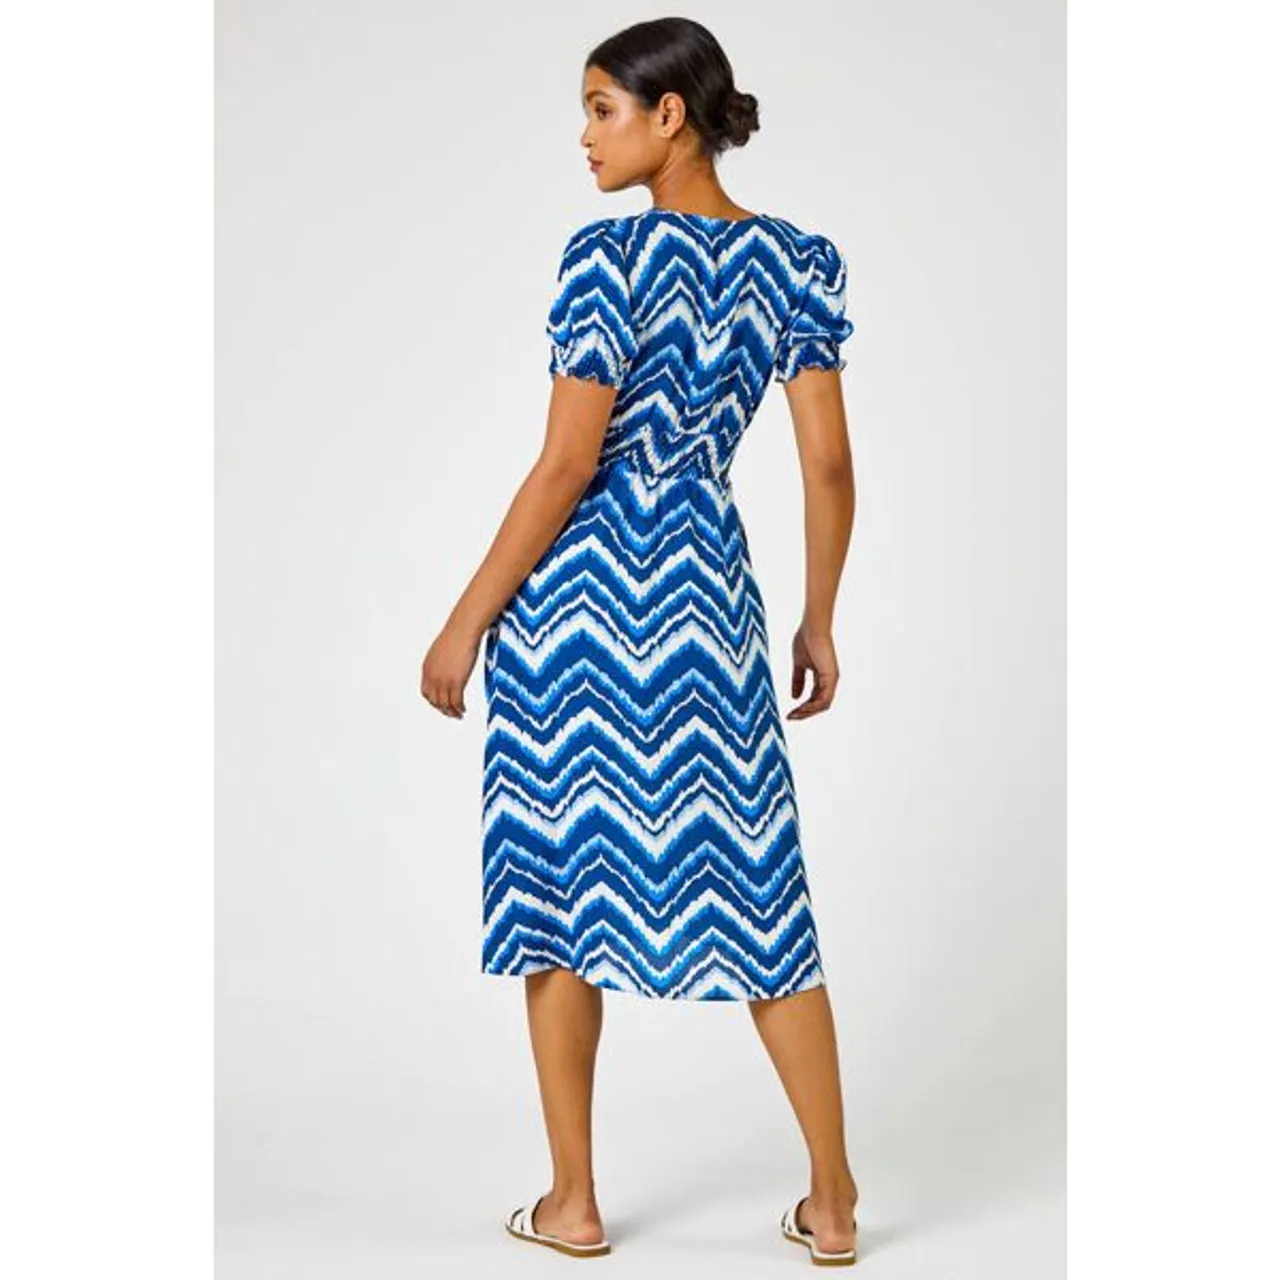 Roman Abstract Zig Zag Pocket Tea Dress in Blue - Size 14 14 female